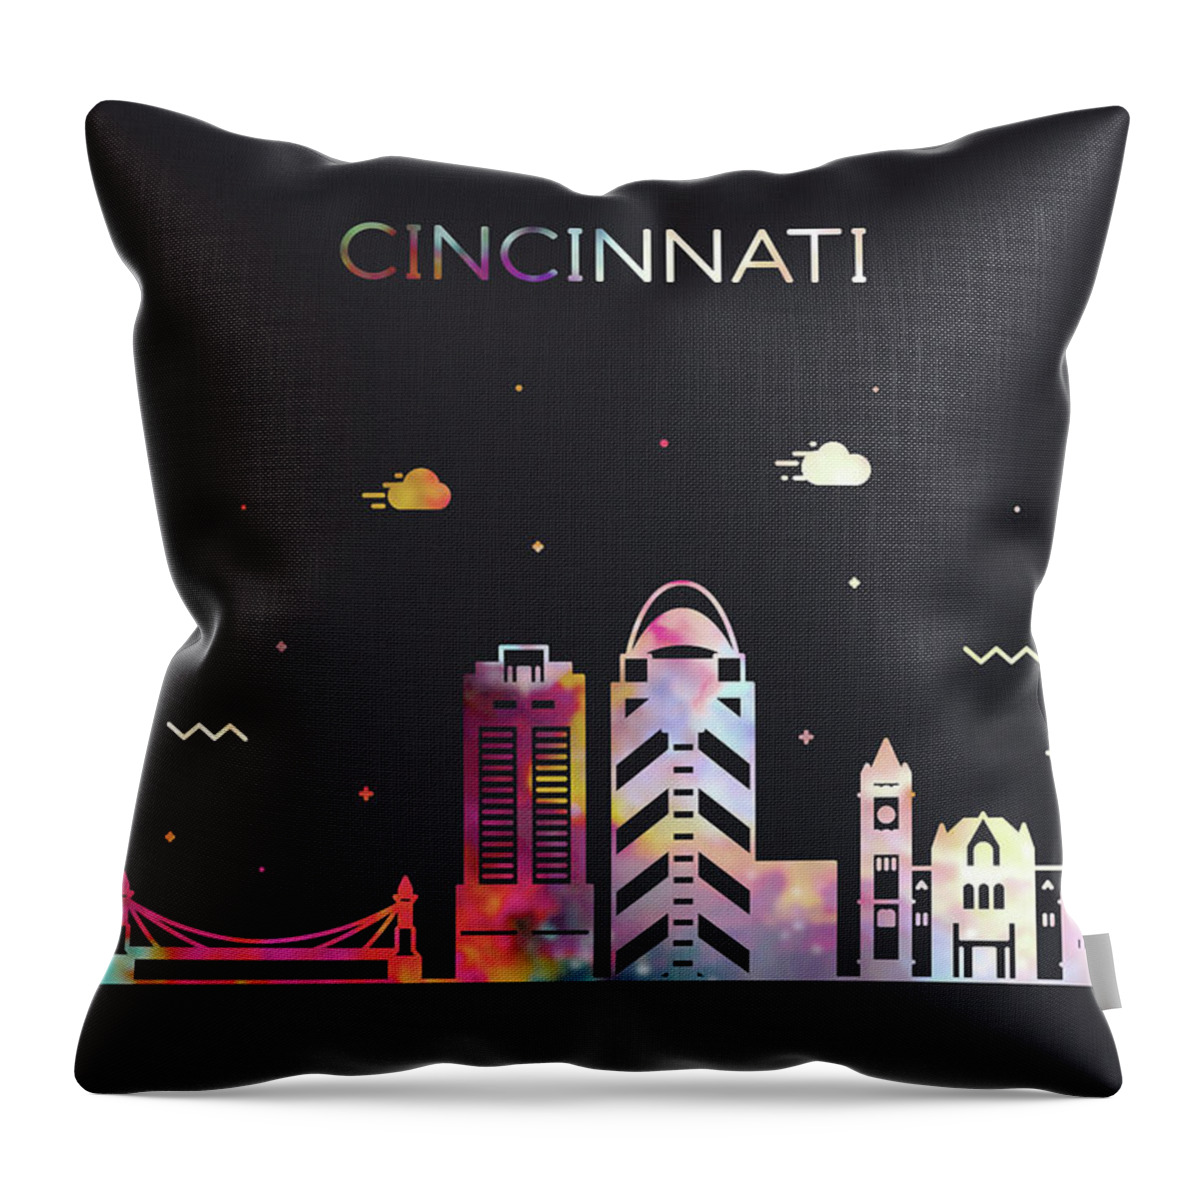 Cincinnati Throw Pillow featuring the mixed media Cincinnati Ohio City Skyline Whimsical Fun Wide Dark by Design Turnpike